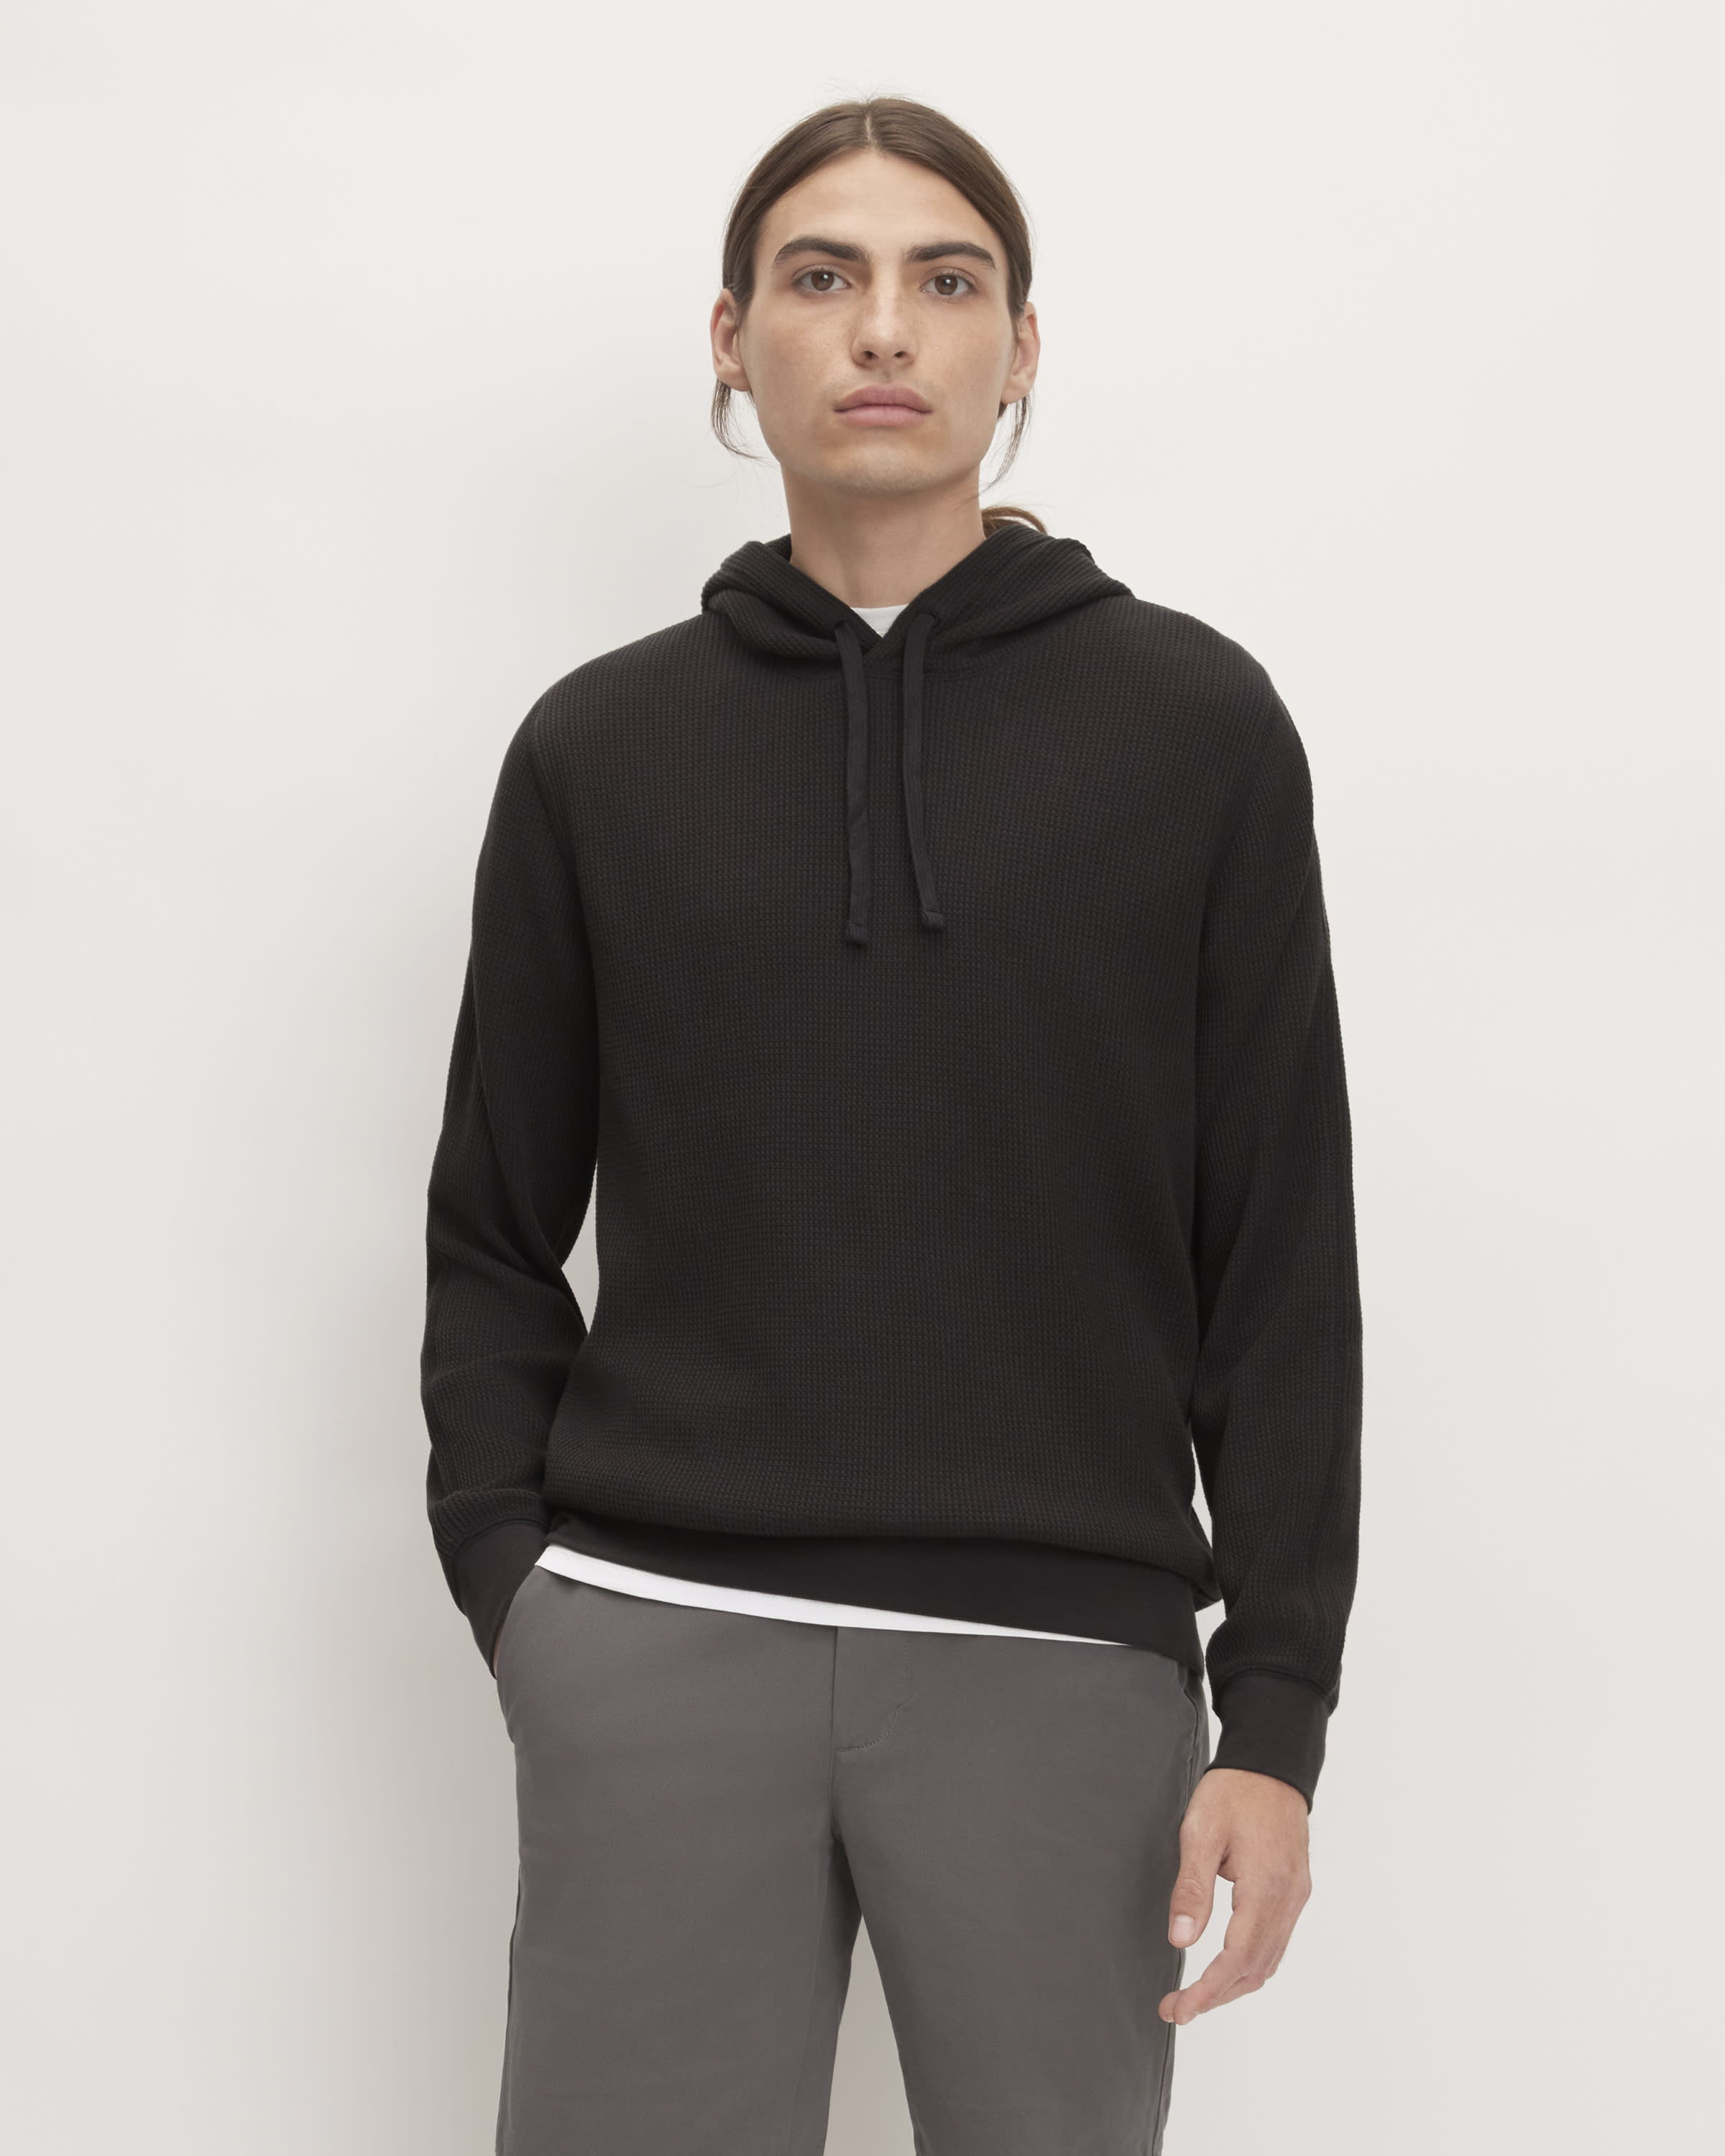 Super Soft Fleece Sweatshirt in Black XS - L